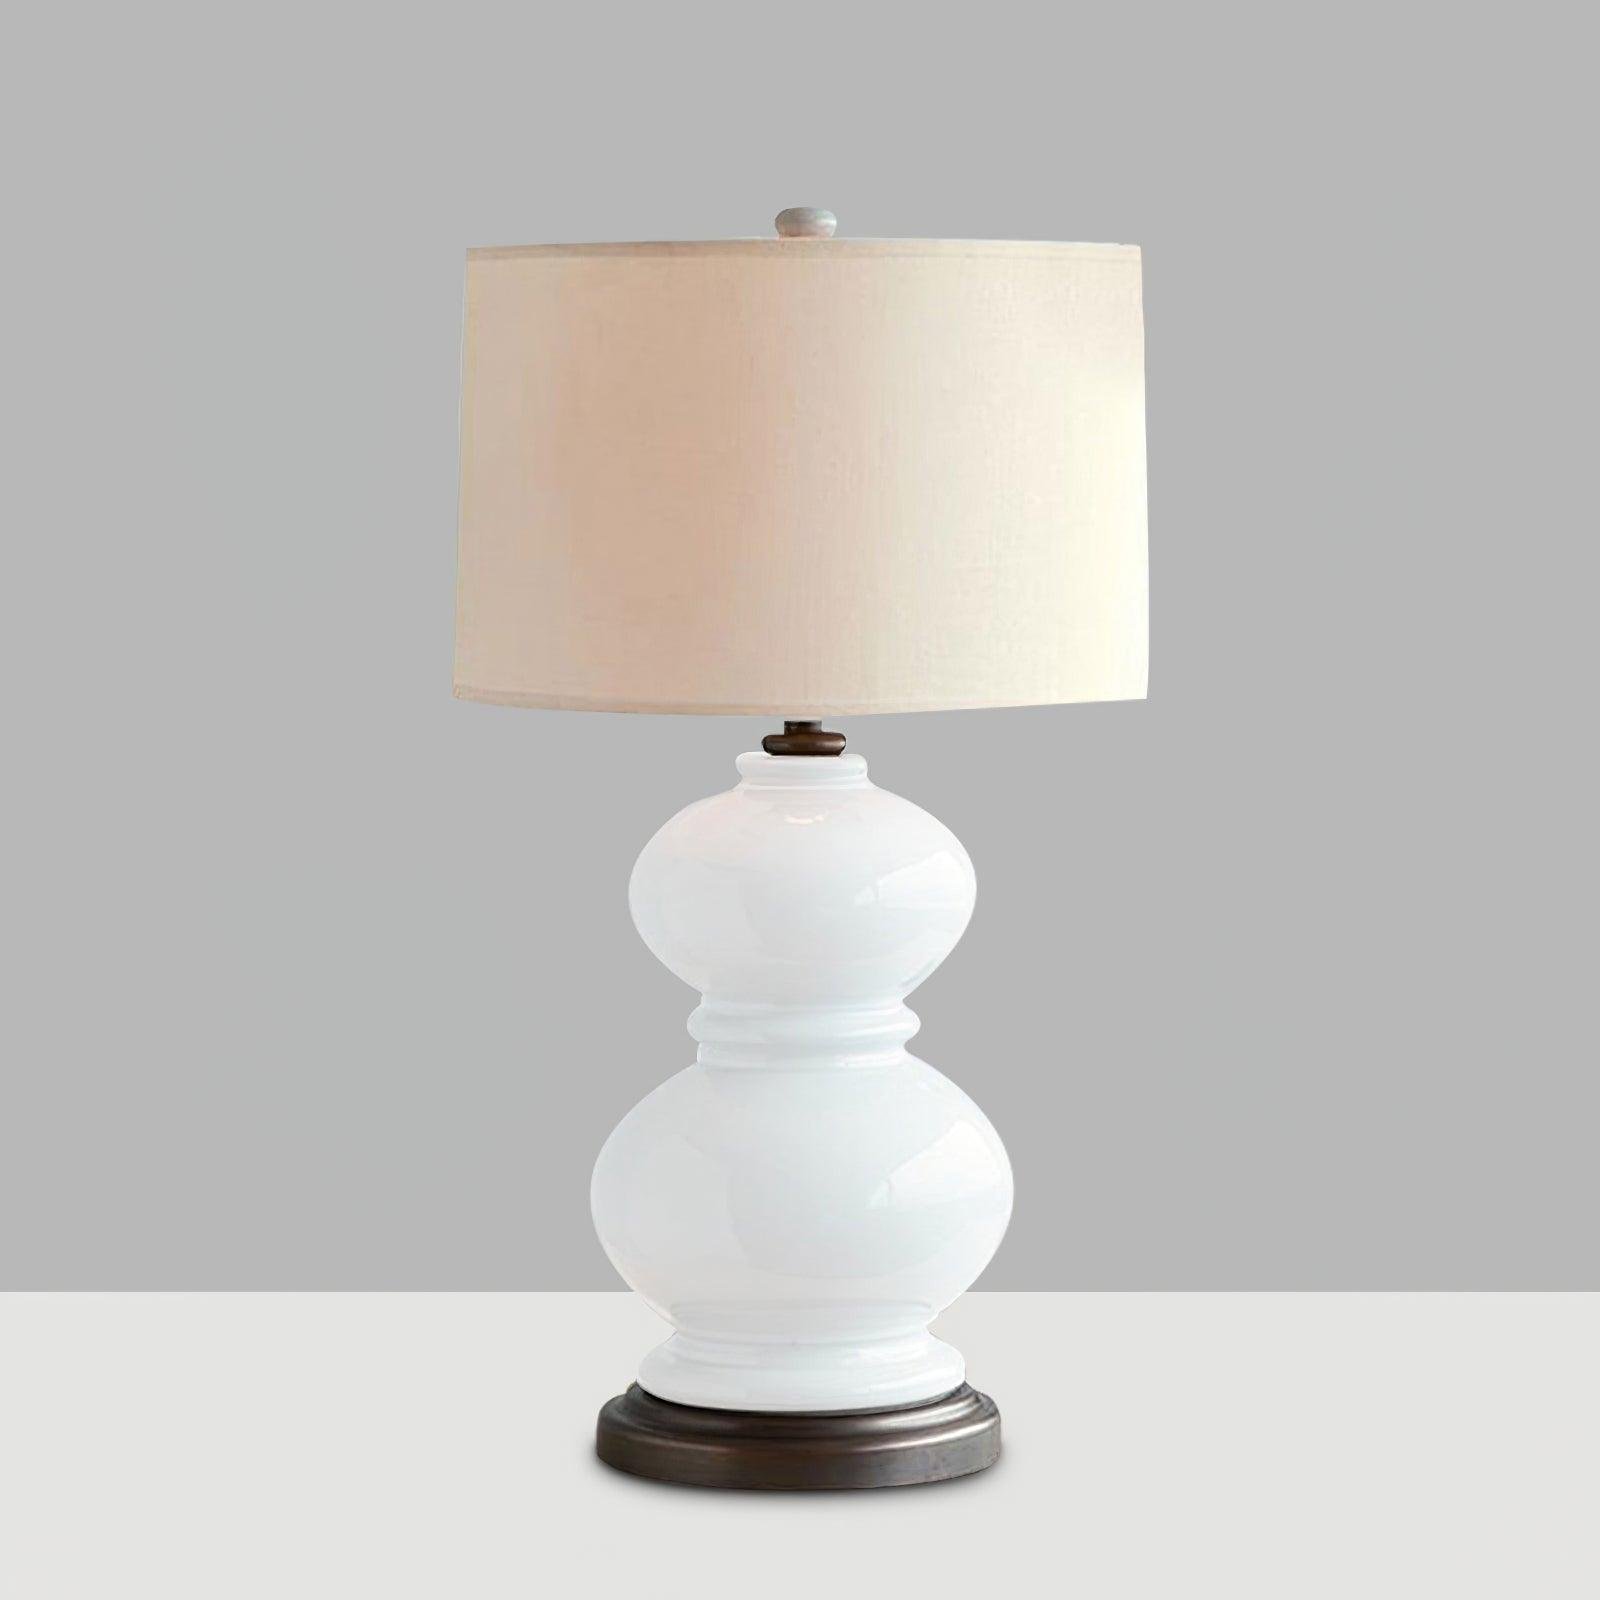 UK Plug White Ceramic Gourd Table Lamp, measuring 14.9" in diameter and 26.7" in height (38cm x 68cm).